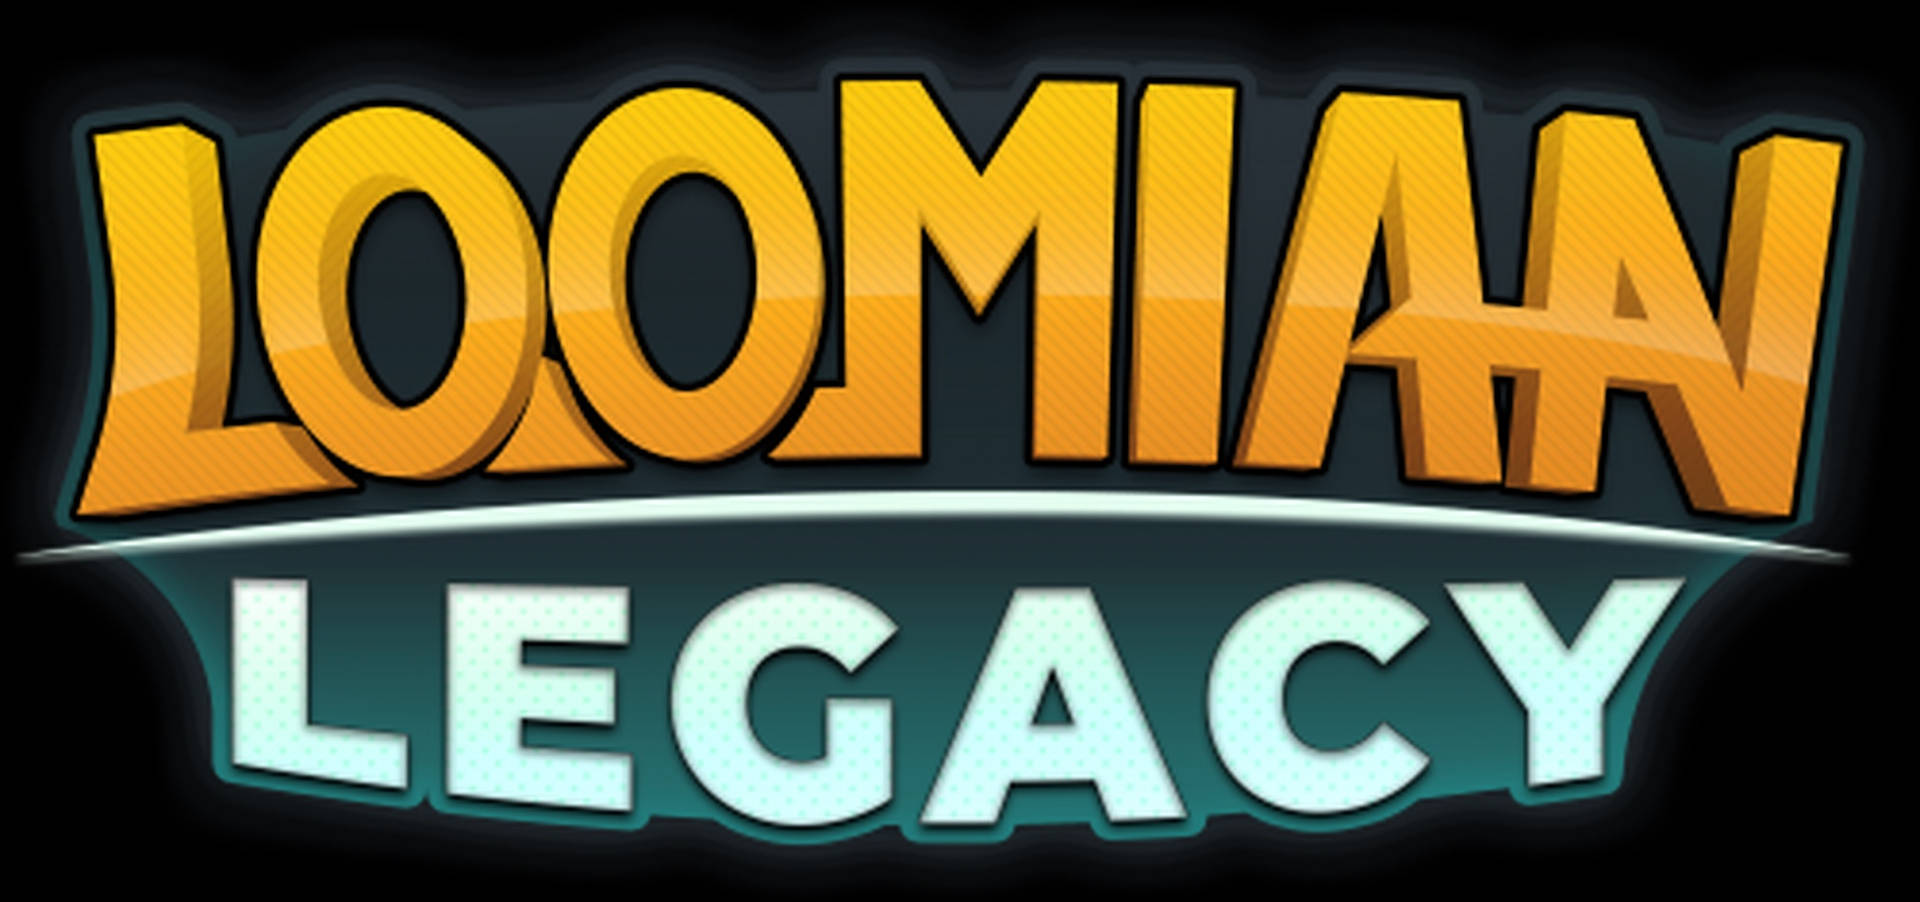 Loomian Legacy Logo Wallpaper